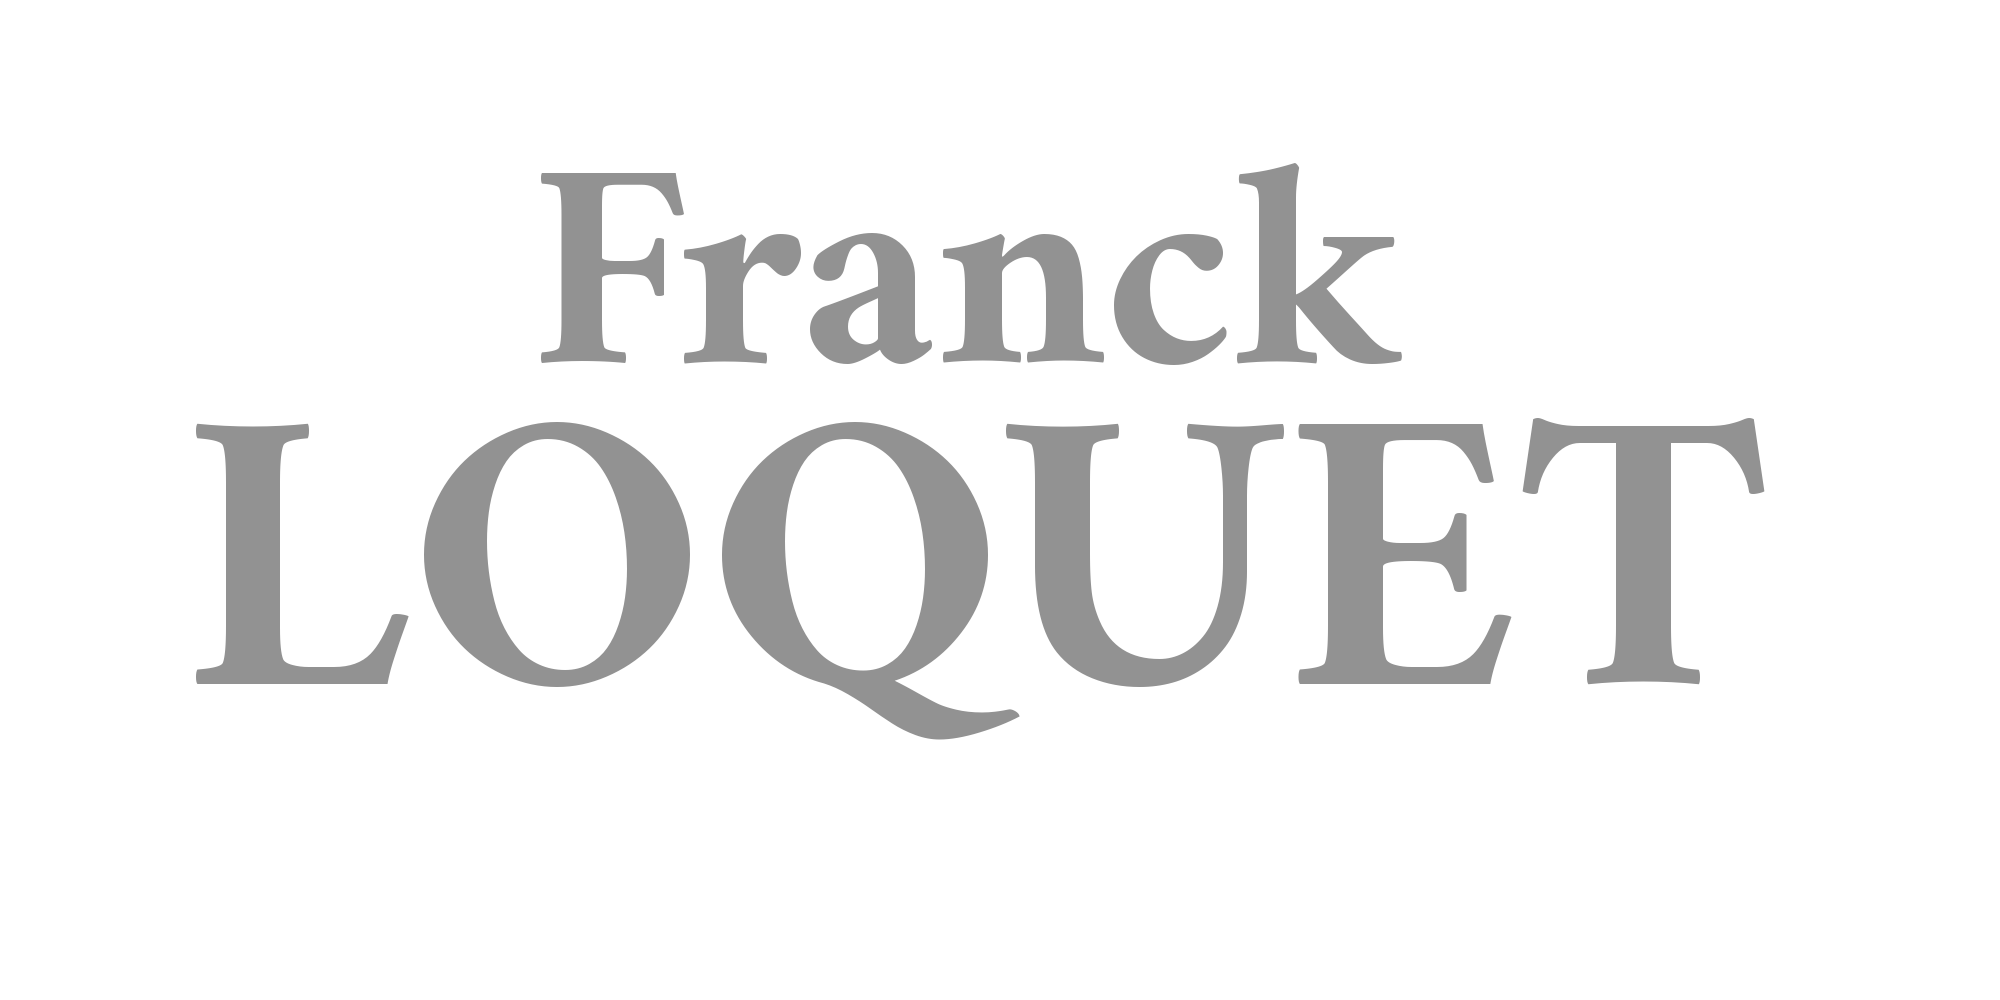 Franck Loquet